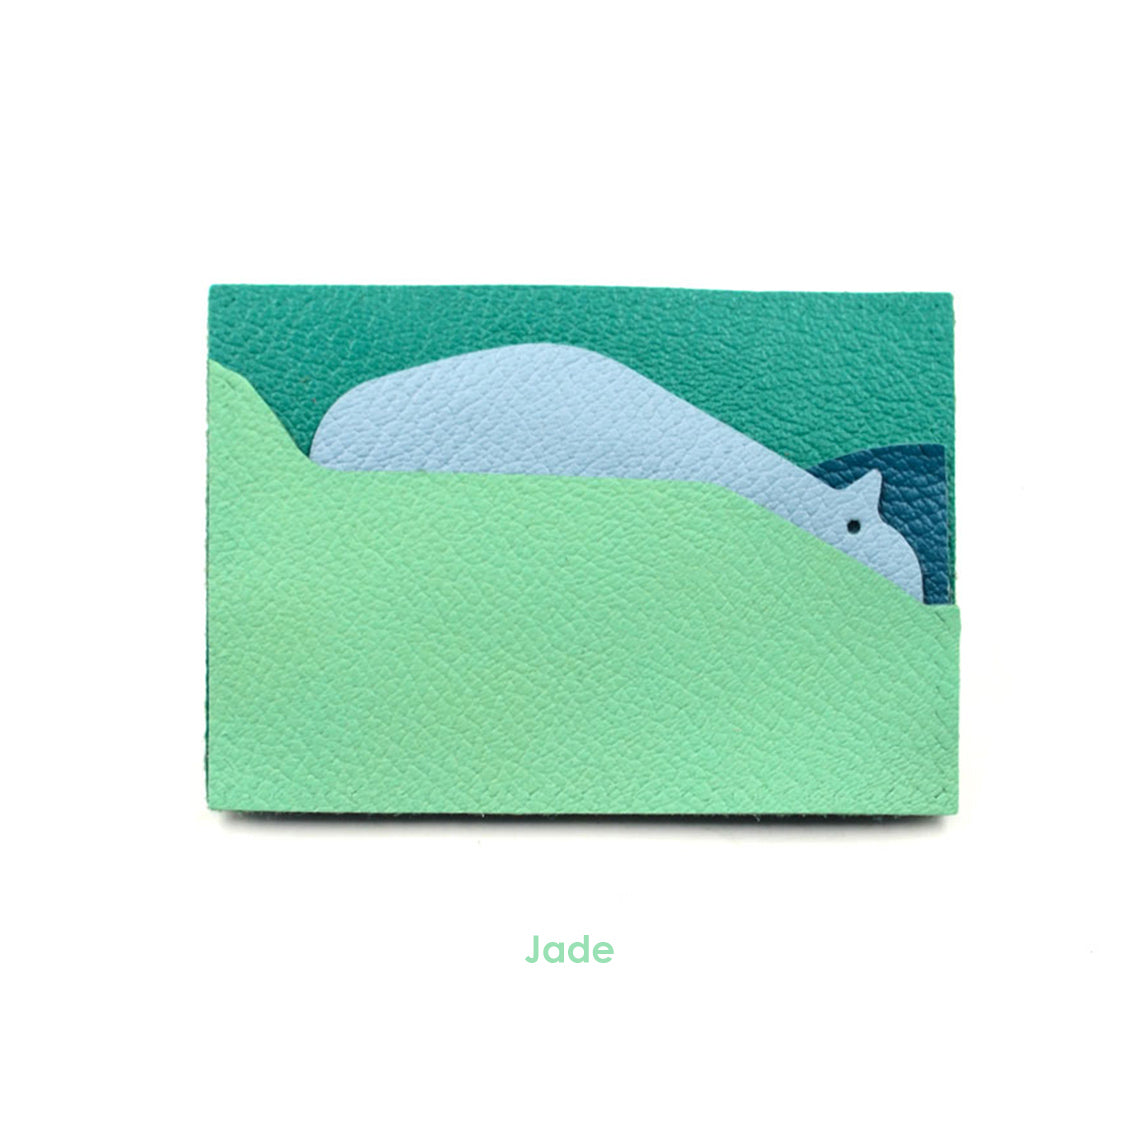 Funny Gift Card Holders in Jade | Hippo Animal Card Holder for Kids